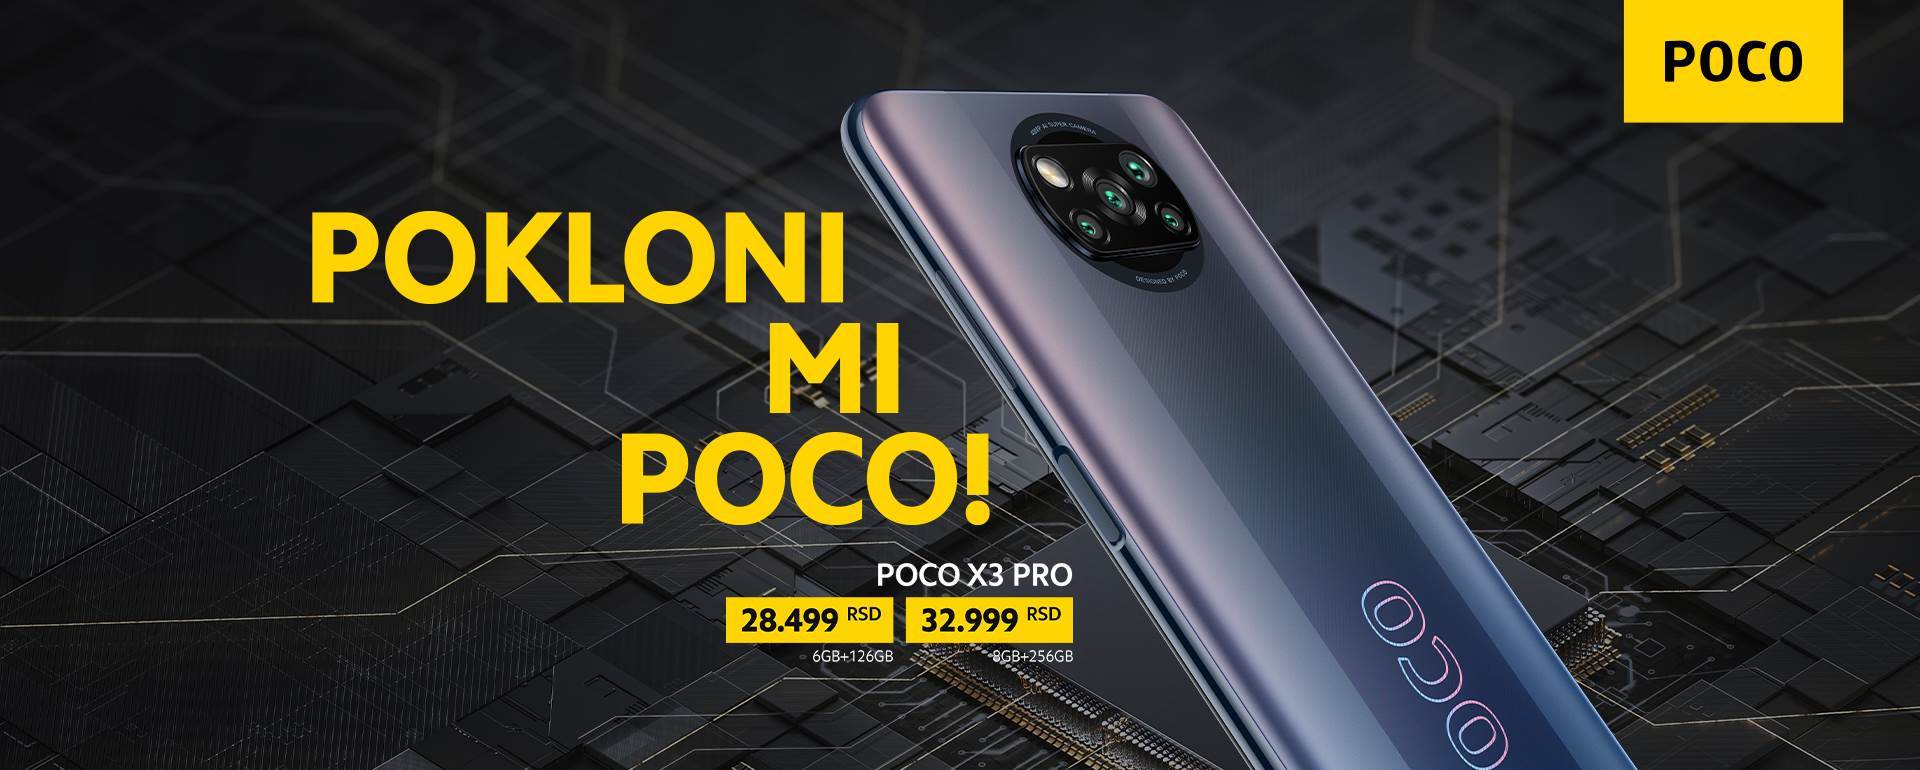 POCO-X3-Pro-promocija-u-Srbiji-niza-cena.jpg 